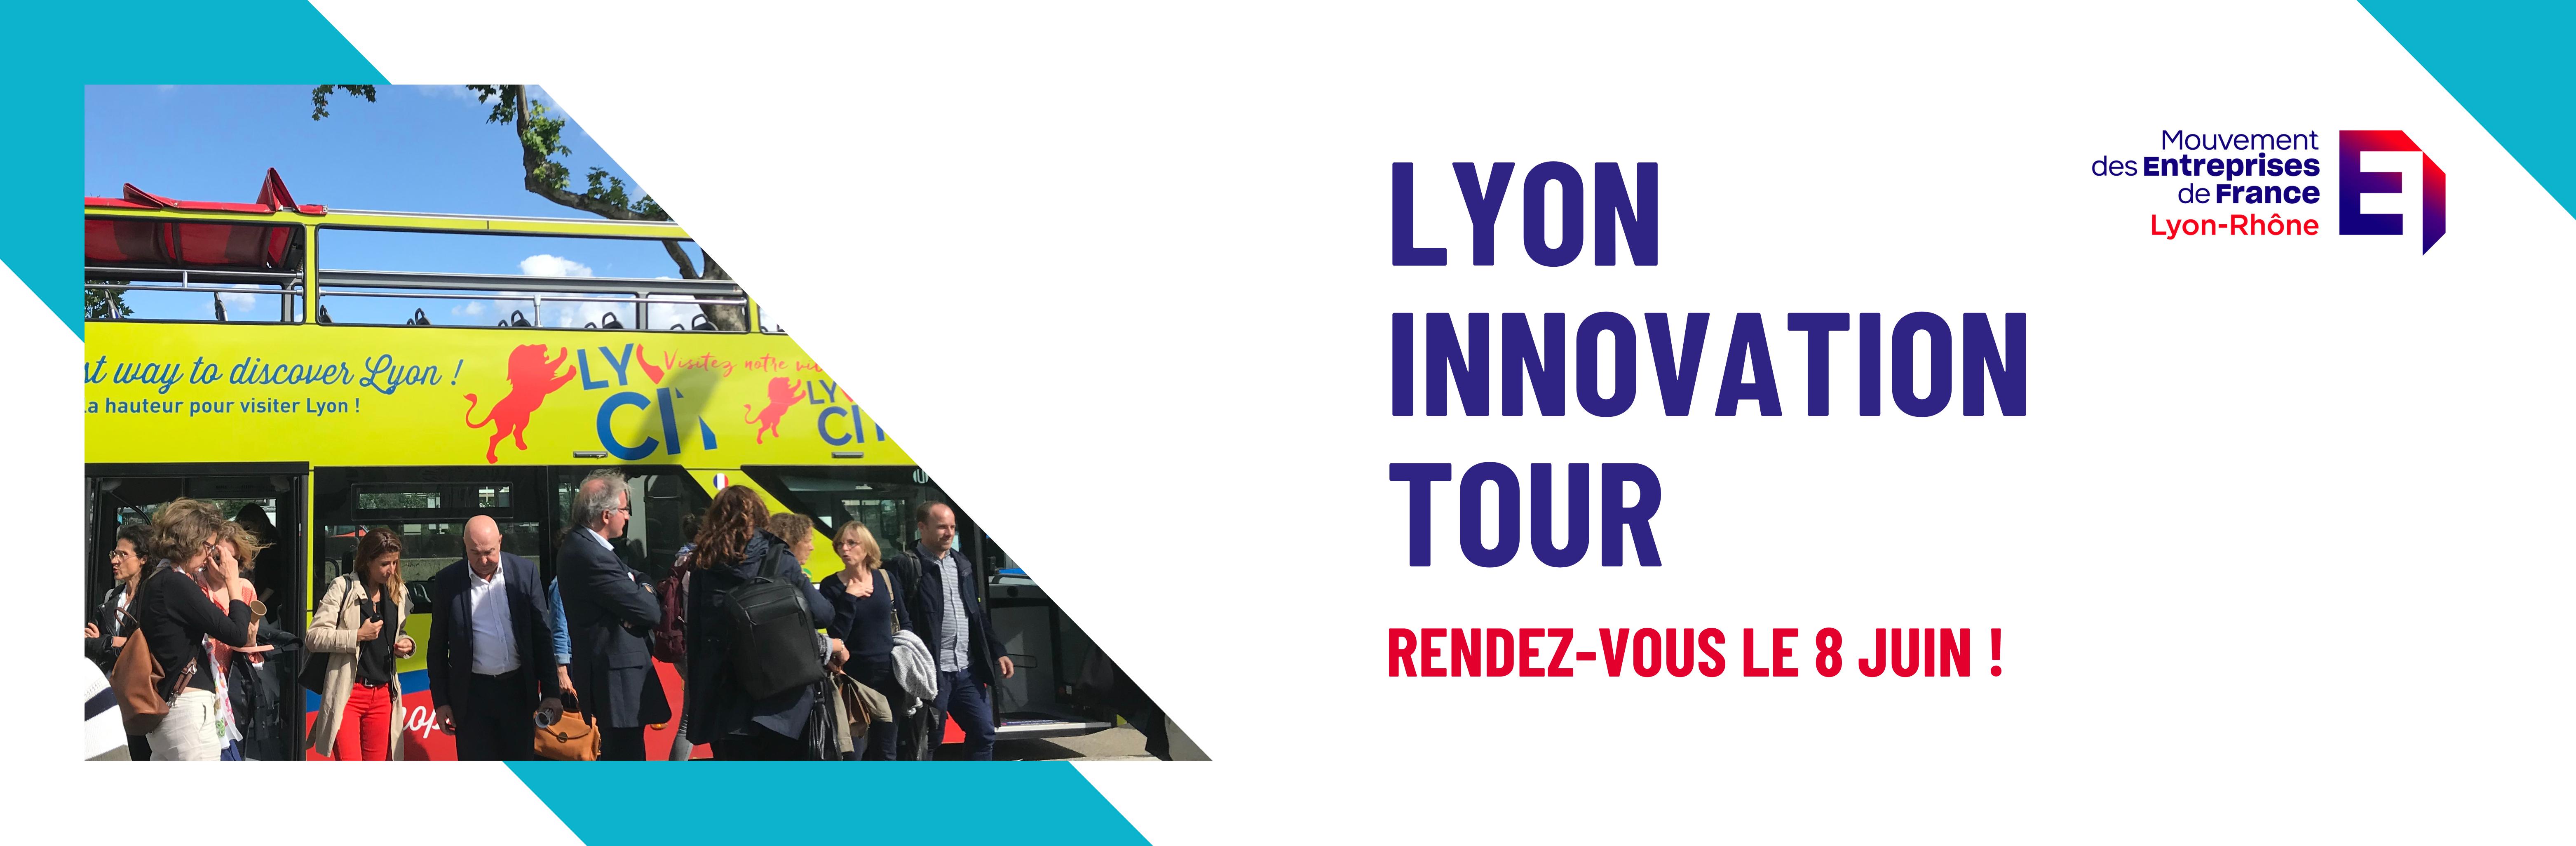 Lyon Innovation Tour - Learning expedition MEDEF Lyon-Rhône